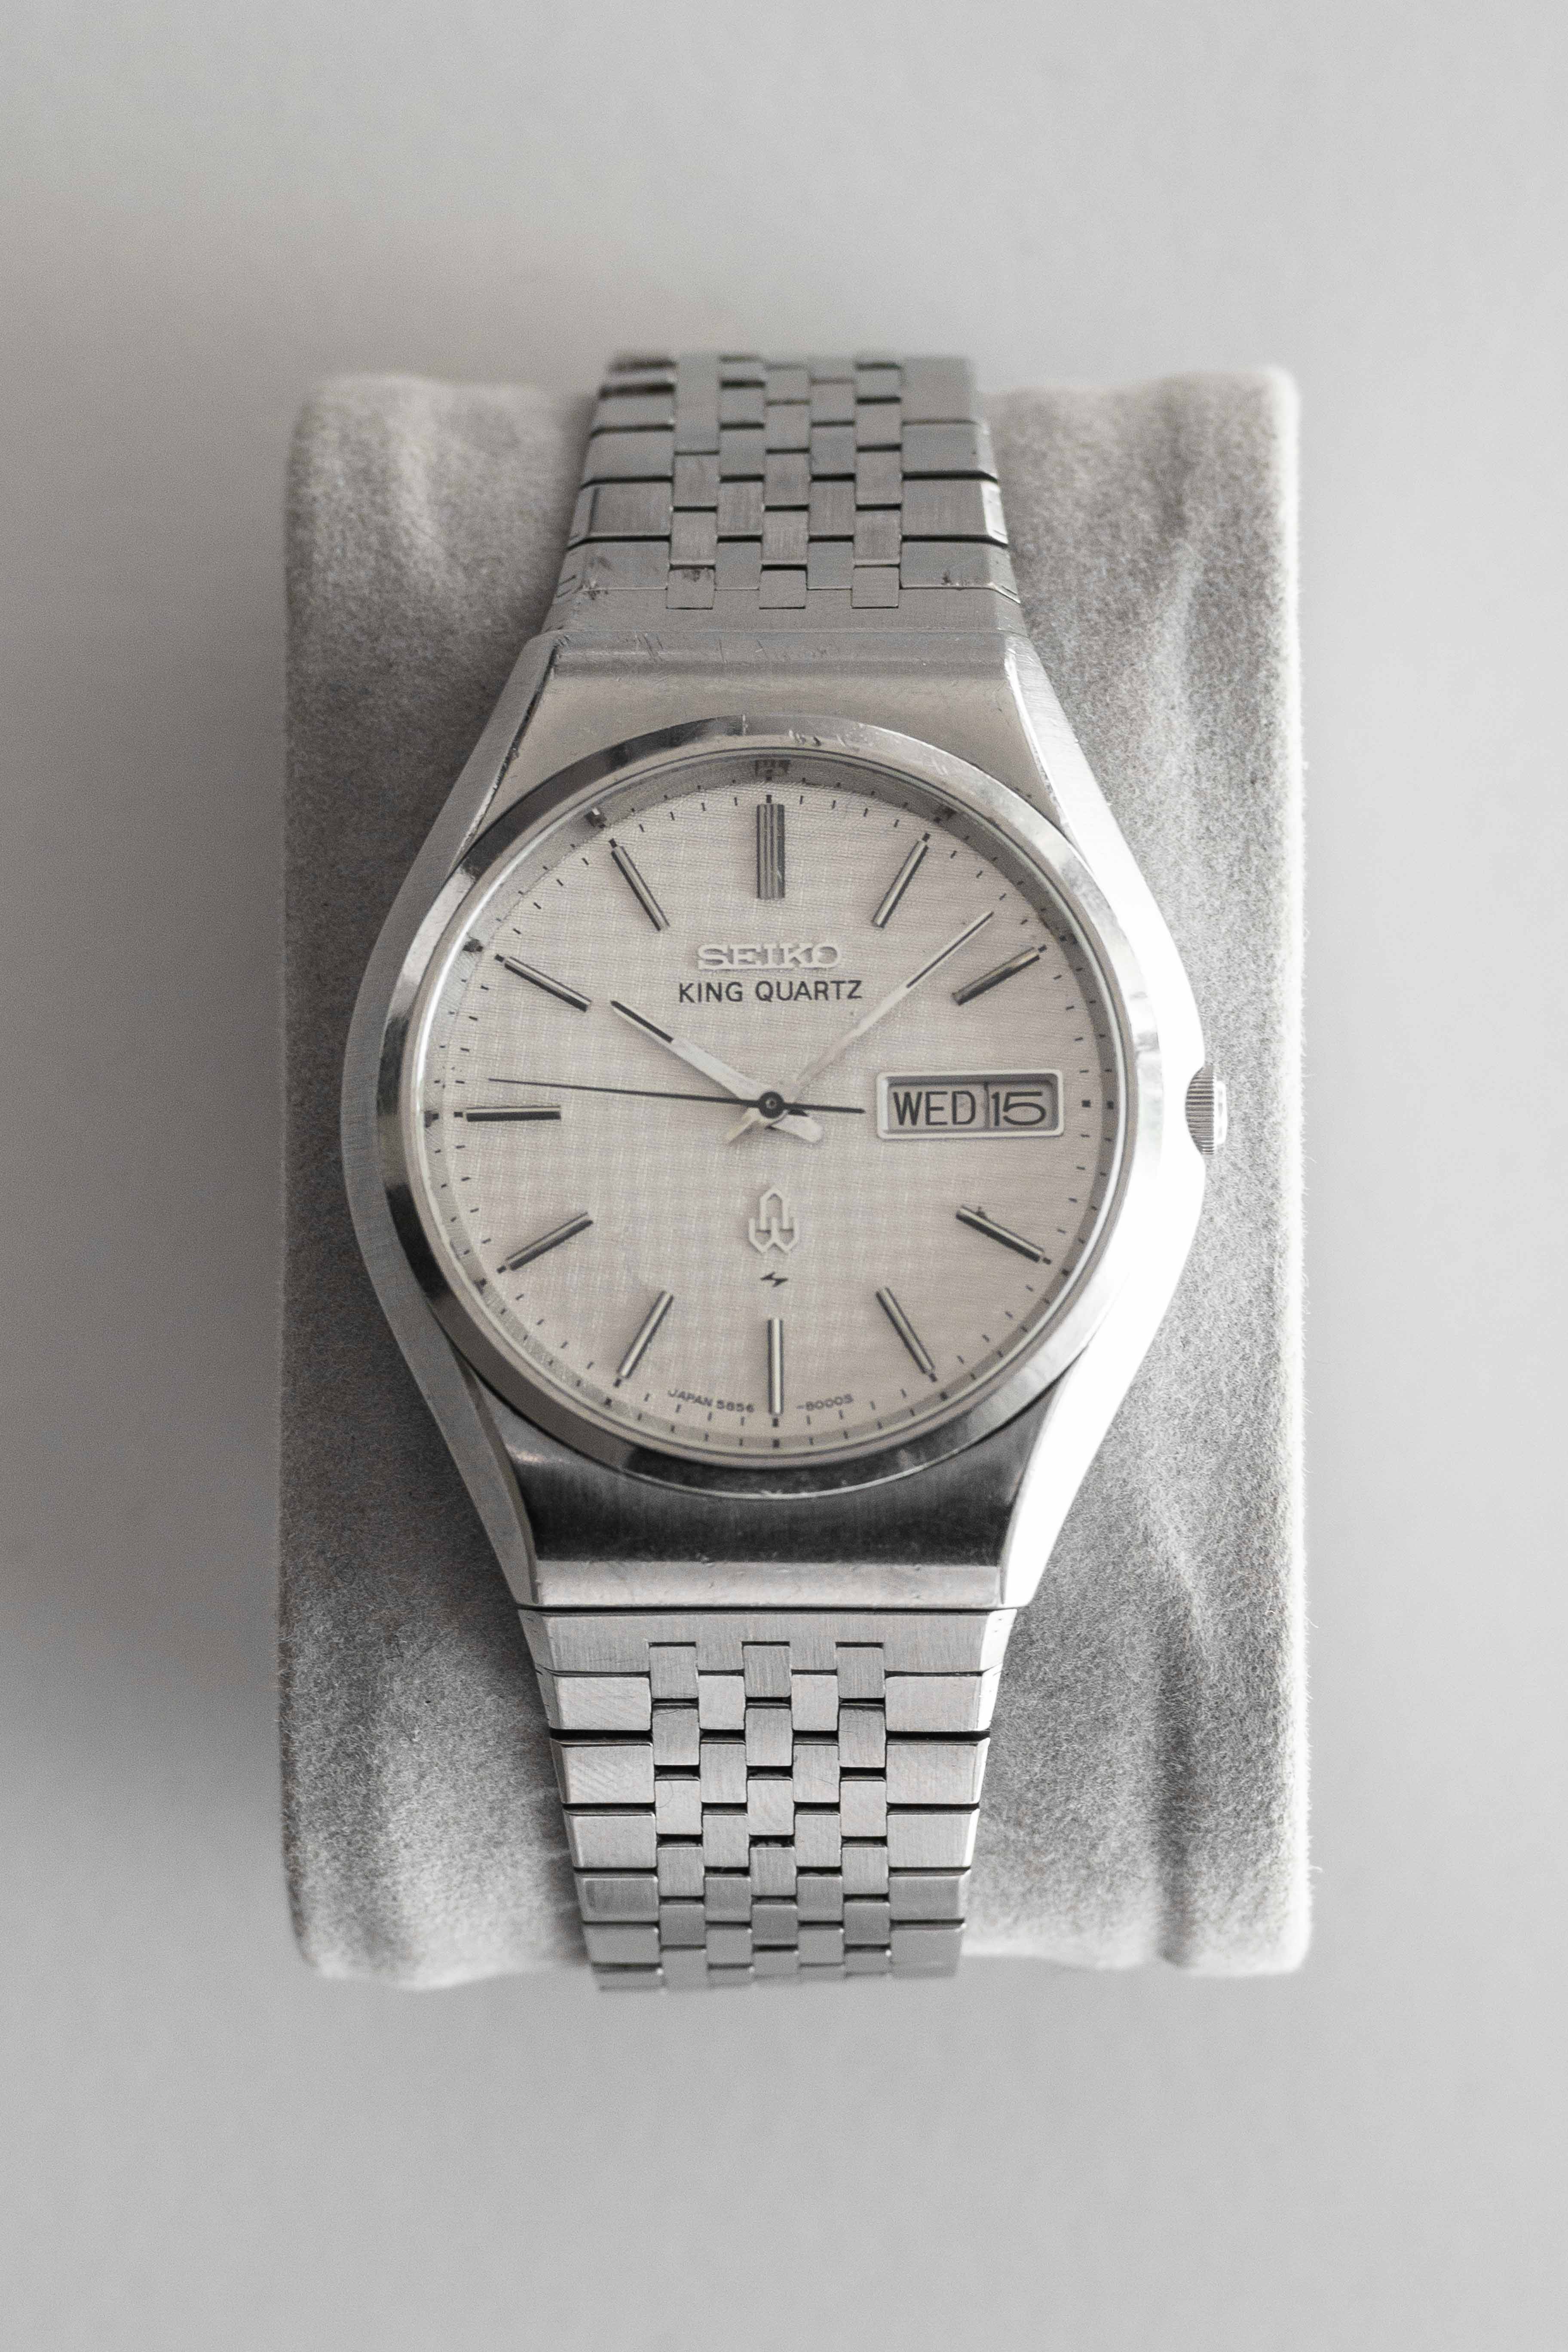 låg Kvalifikation Derfor Seiko King Quartz Ref. 5856-8001 1983 | Vintage & Pre-Owned Luxury Watches  – Wynn & Thayne